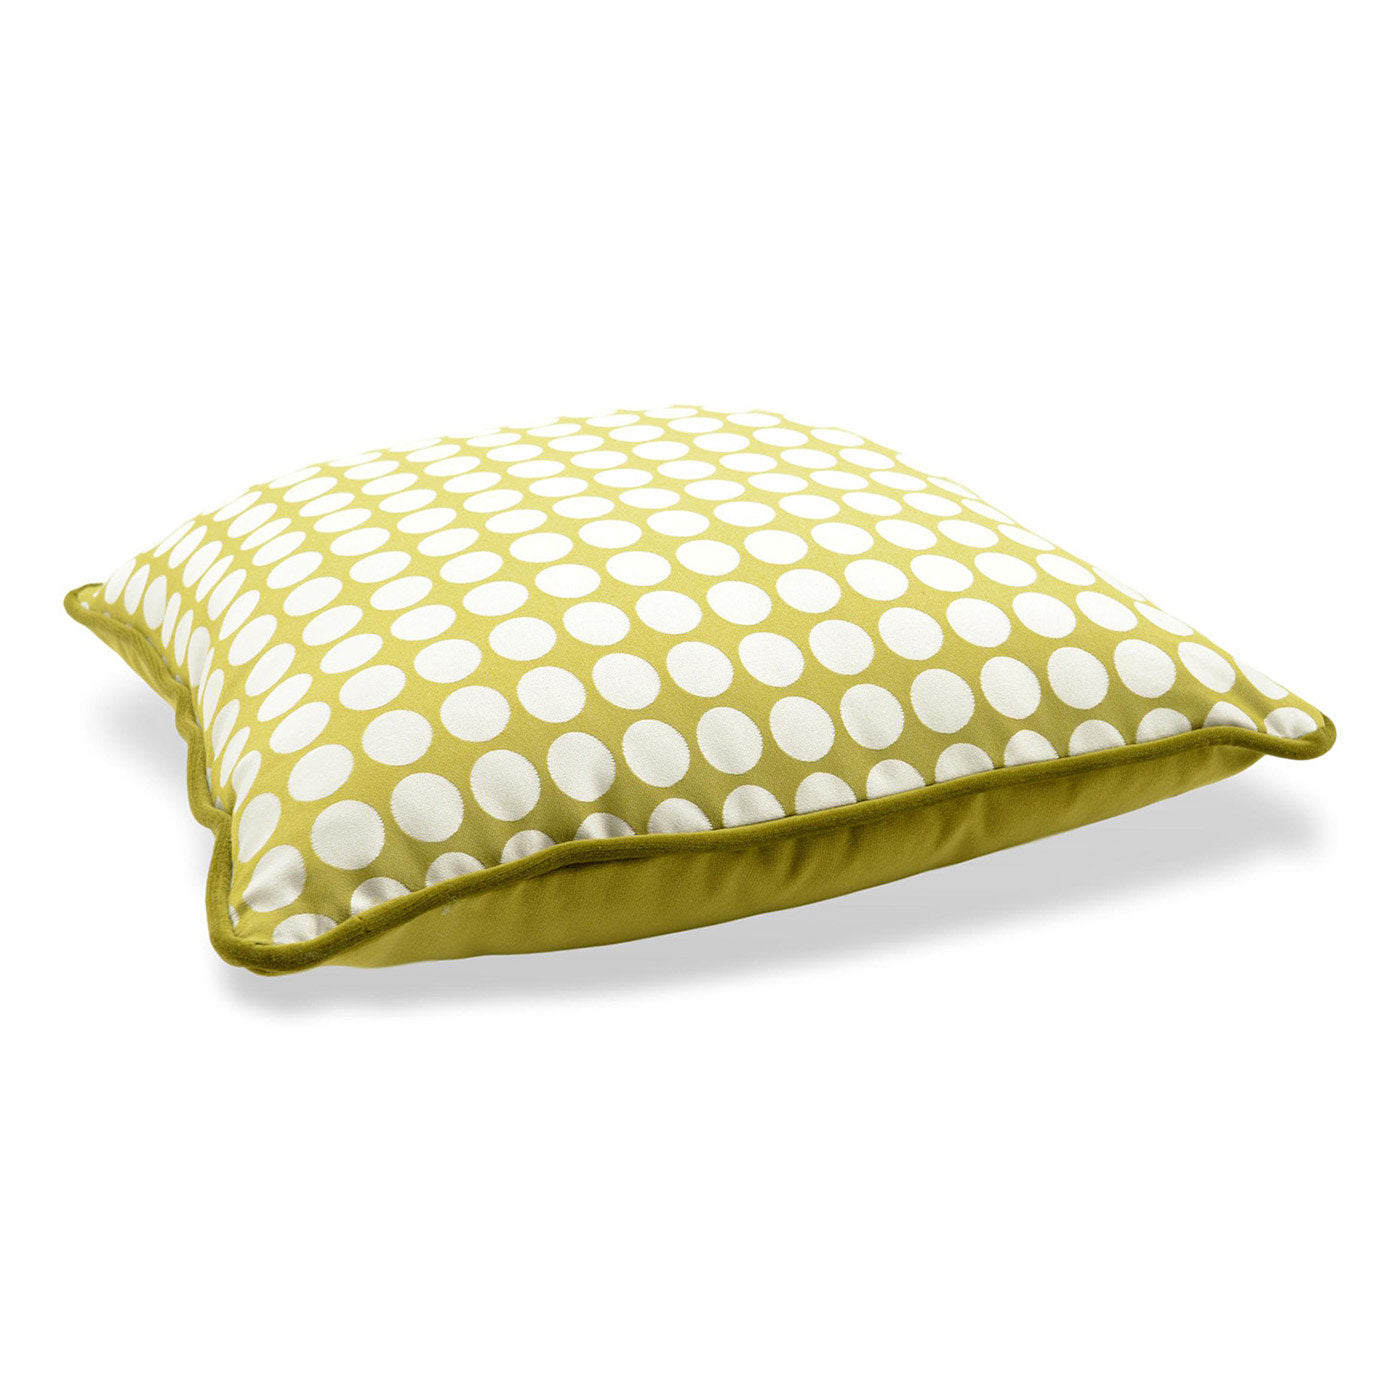 Green Carrè Cushion in polka dots jacquard fabric - Alternative view 2